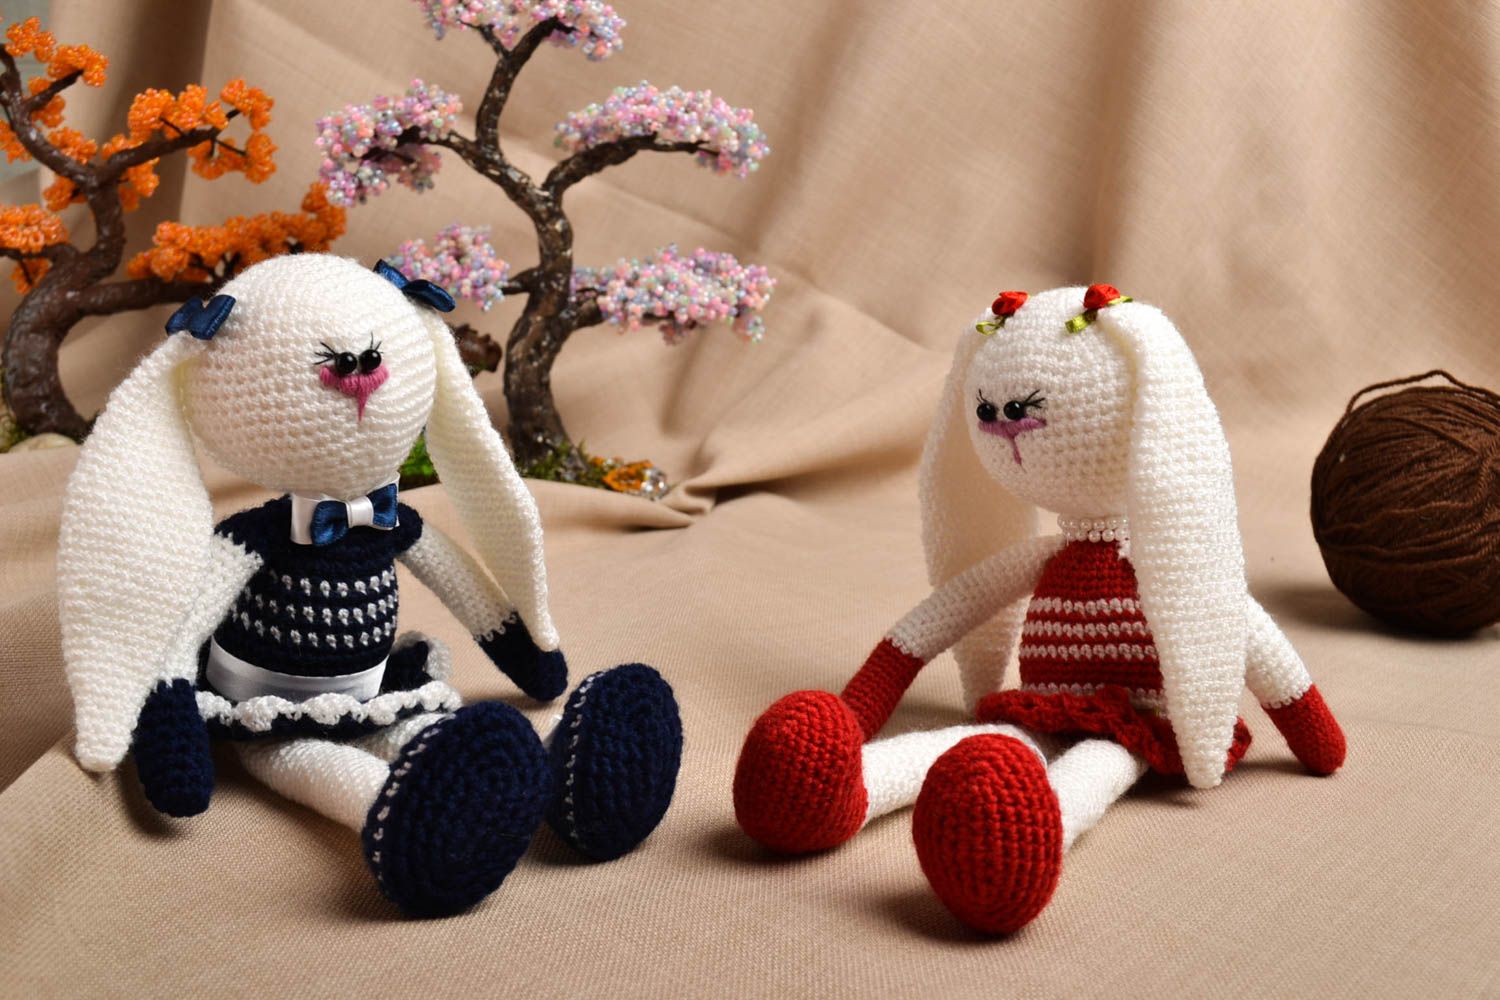 Handmade hand-crocheted toys home decor ideas cute soft toys for children photo 1